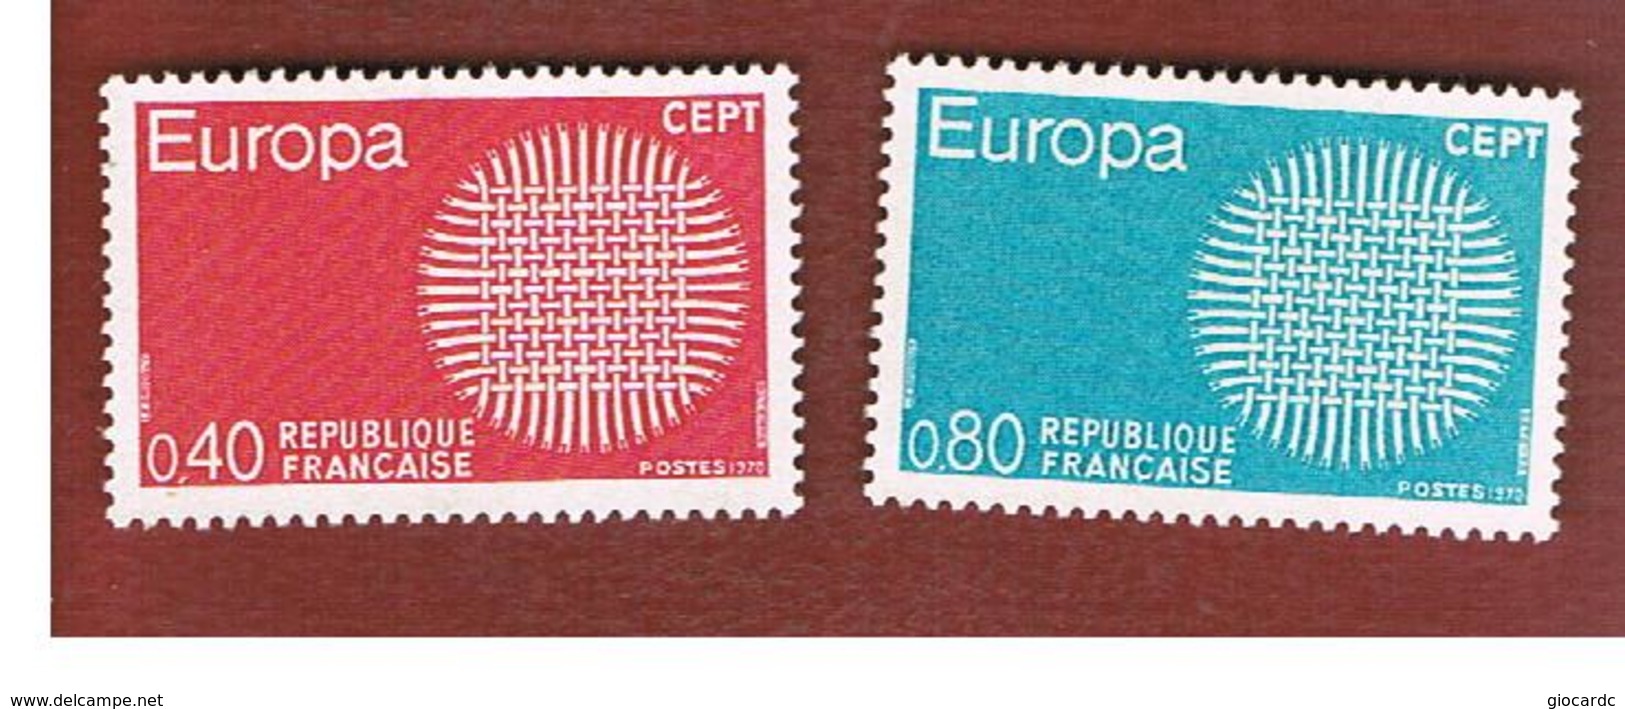 FRANCIA  (FRANCE)      -  SG 1874.1875  -  1970  EUROPA (COMPLET SET OF 2)         - MINT ** - Nuovi